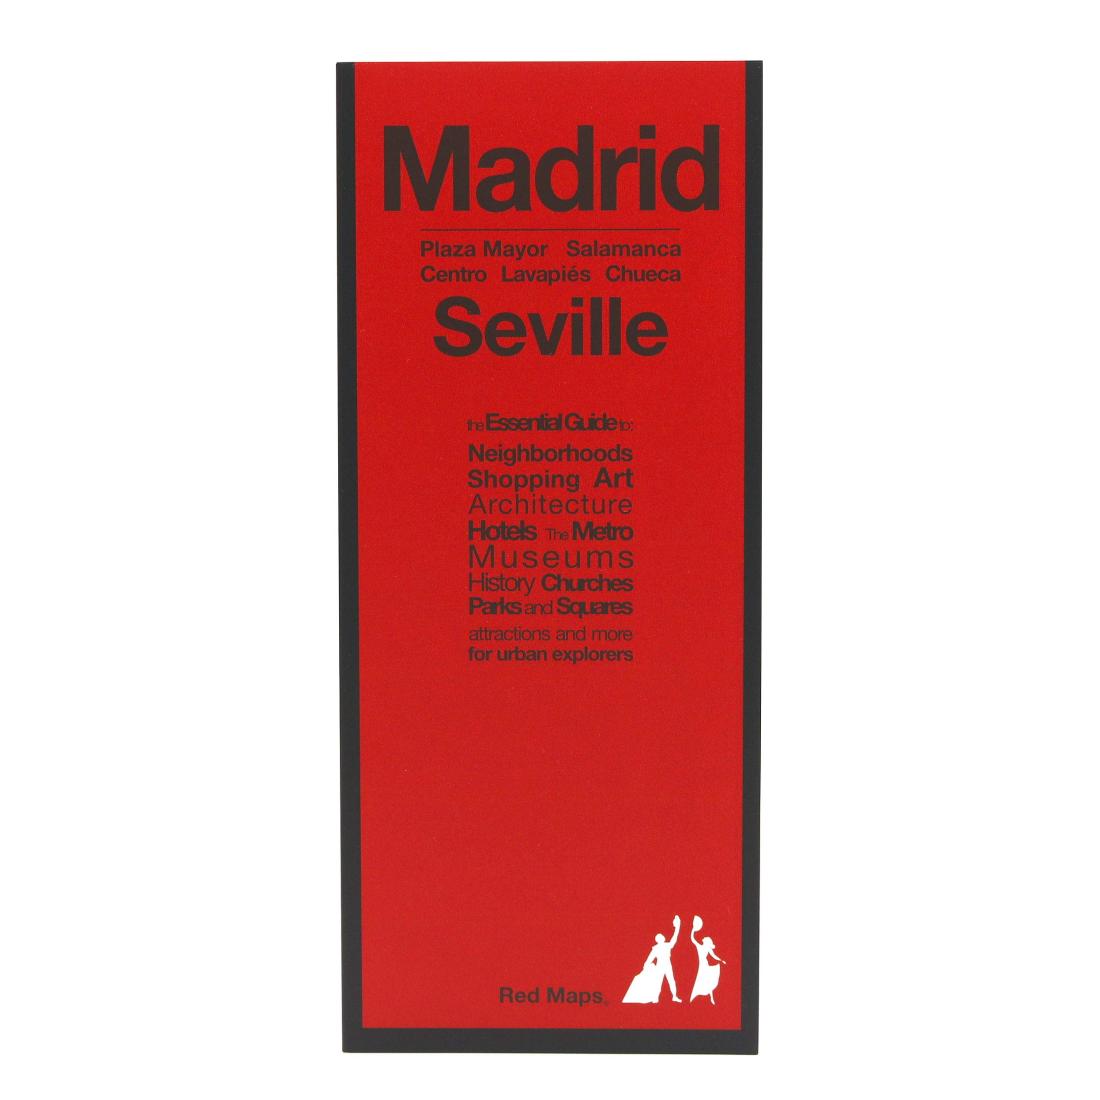 Madrid : Seville